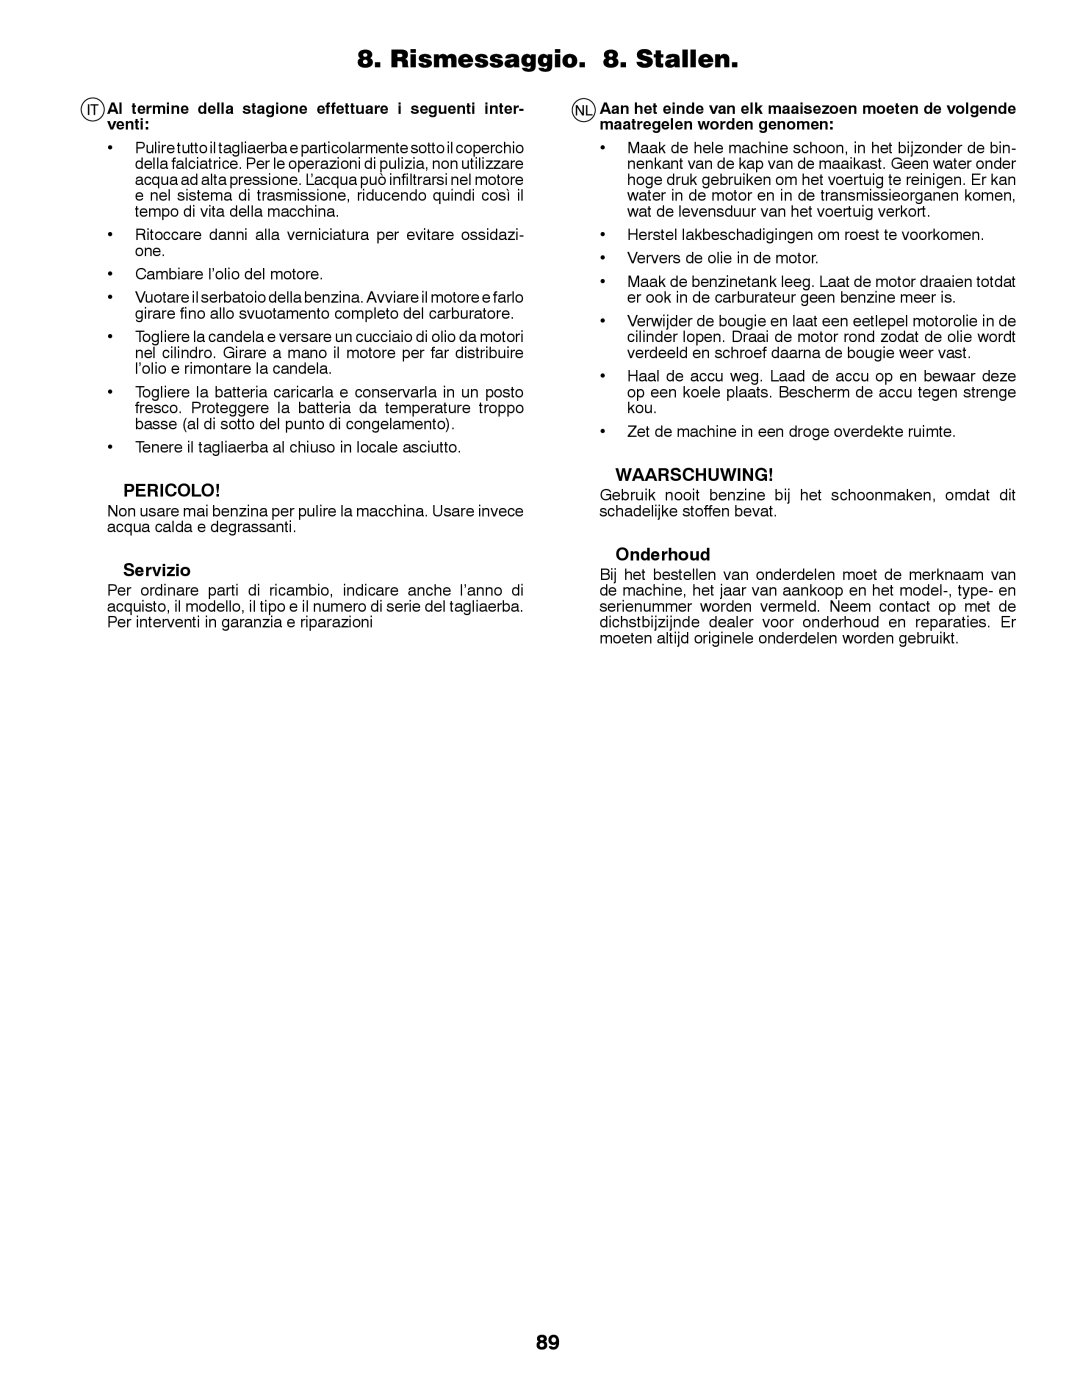 Jonsered LT2213C instruction manual Rismessaggio. 8. Stallen, Pericolo, Servizio, Waarschuwing, Onderhoud 